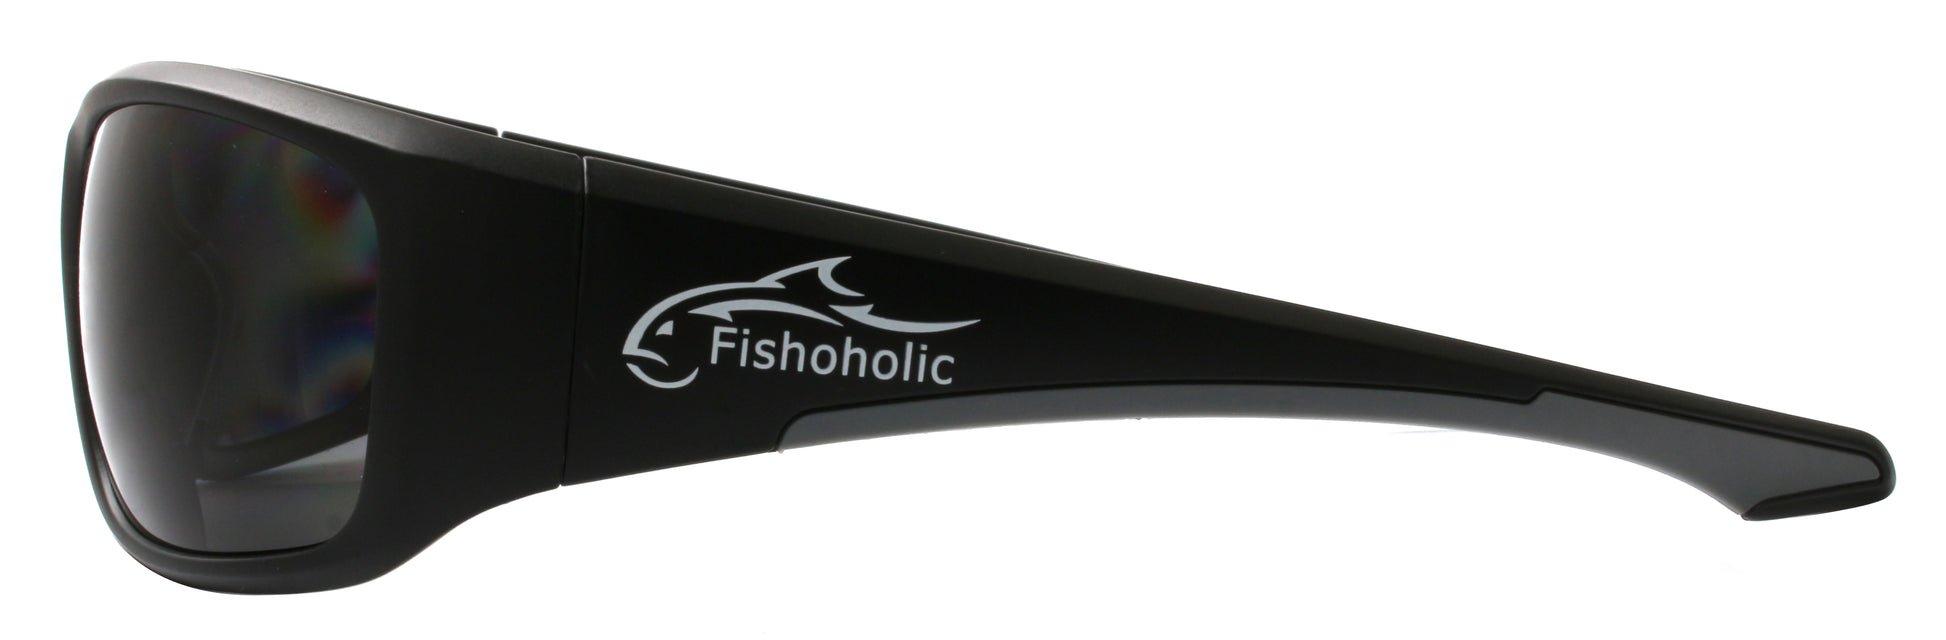 Fishoholic BI-FOCAL x2.0-MB-MB-gry UV400 Polarized Fishing Sunglasses w'  x2.0 Reader